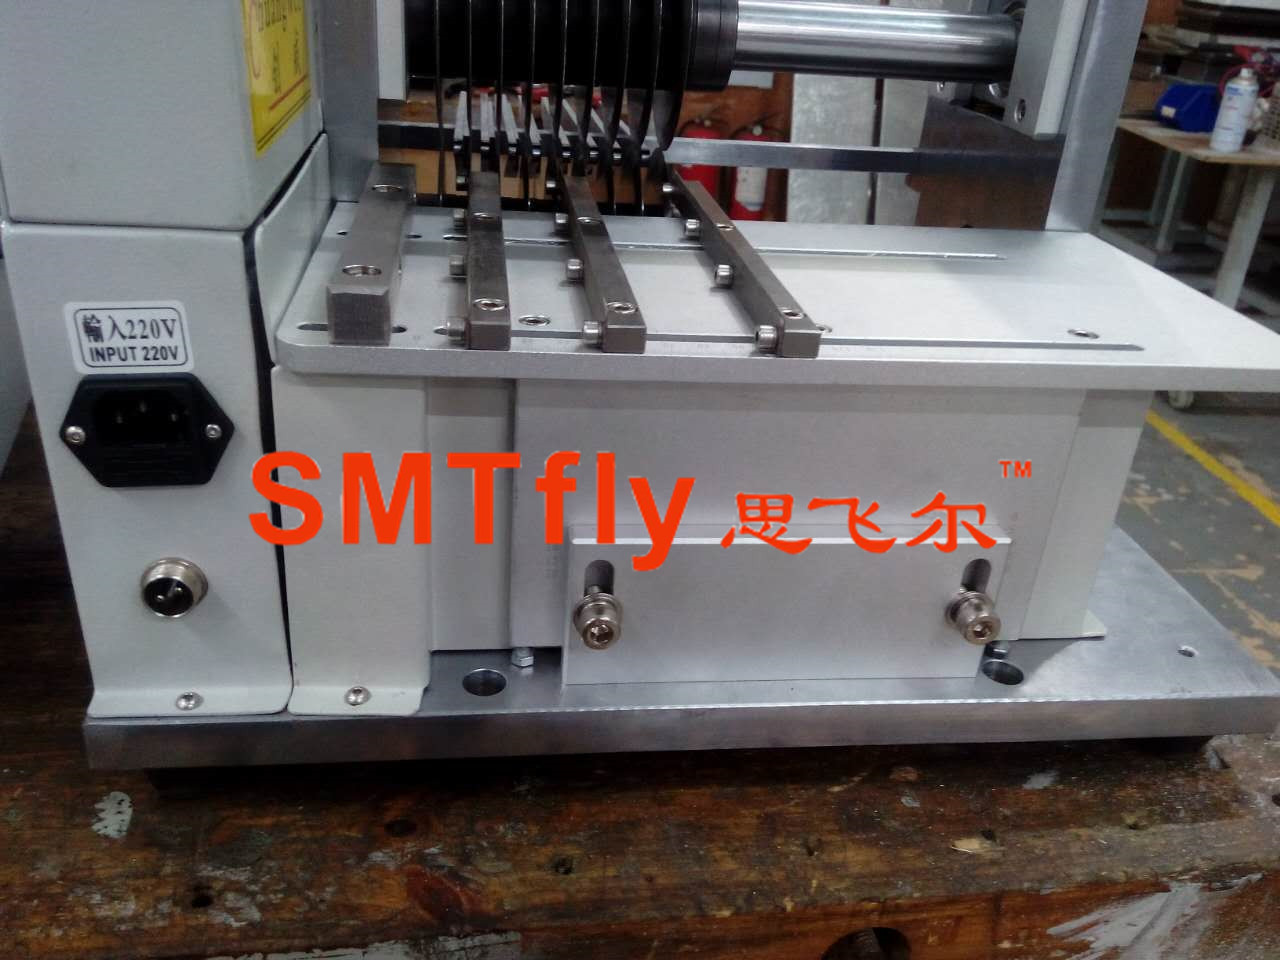 Multi Slitter PCB Depanelizer,SMTfly-1SN